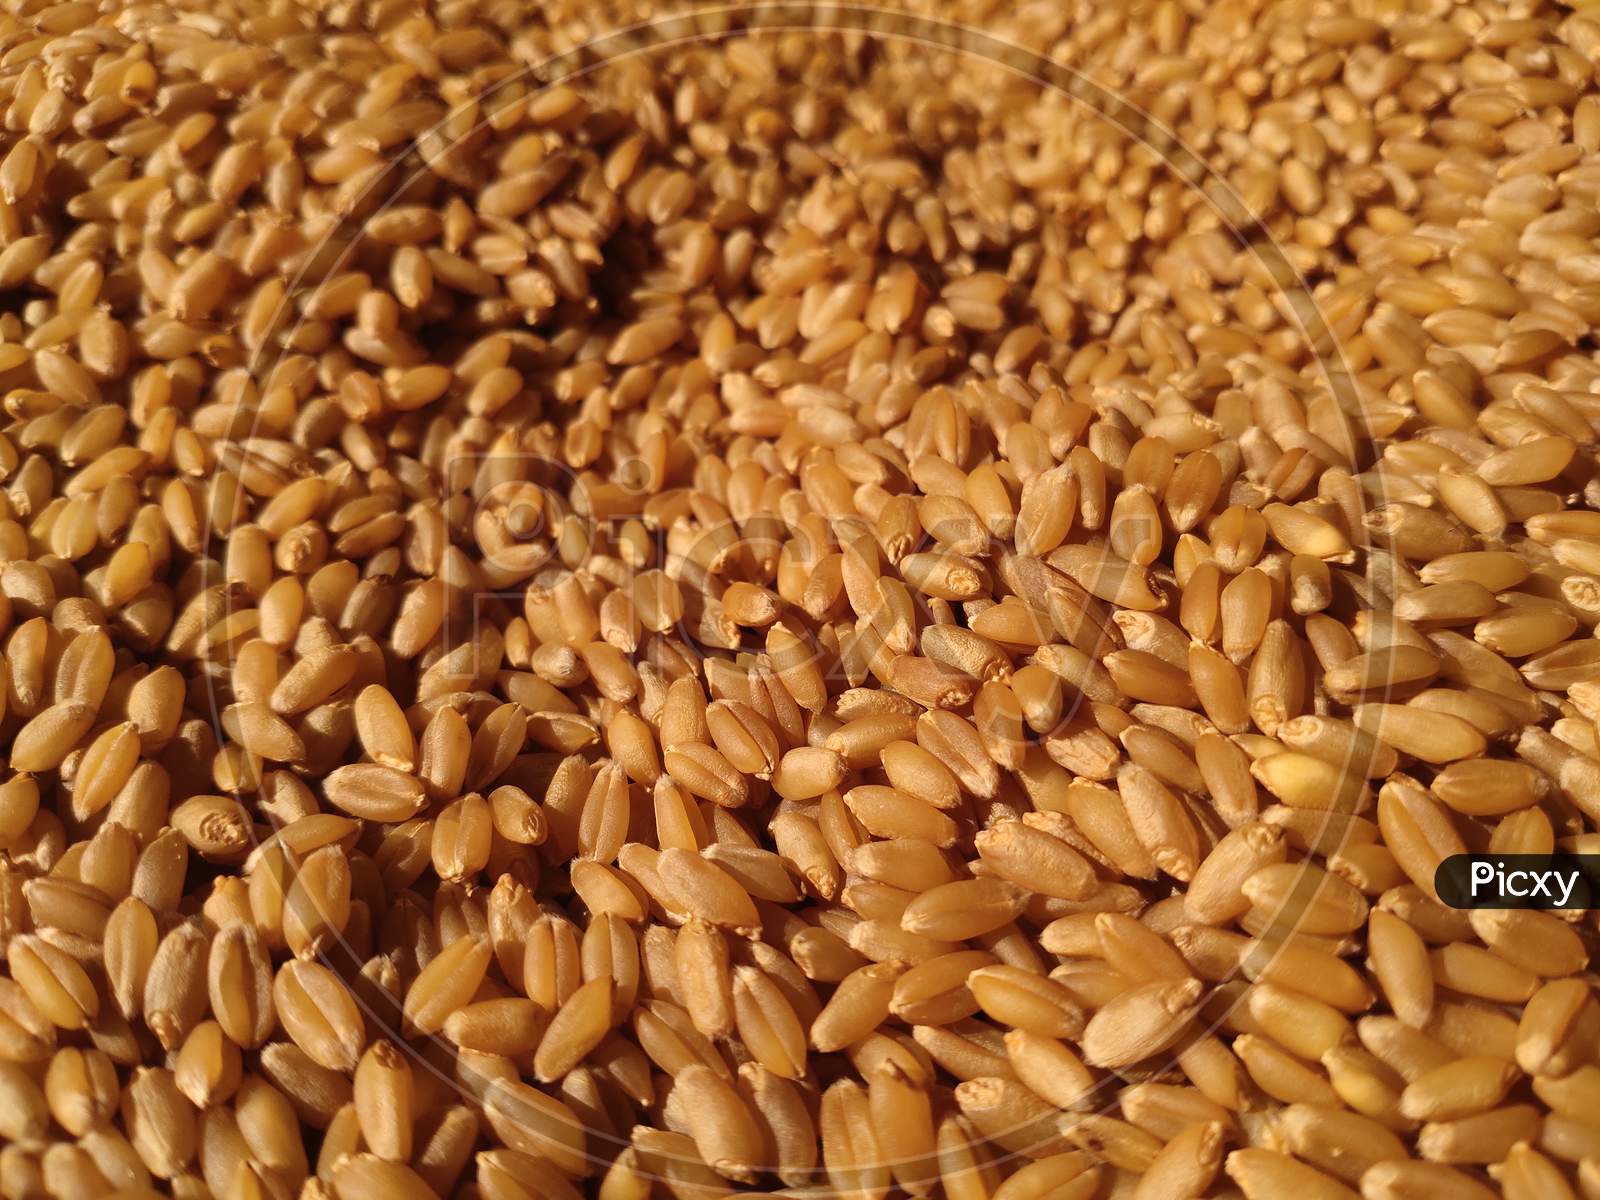 Raw wheat